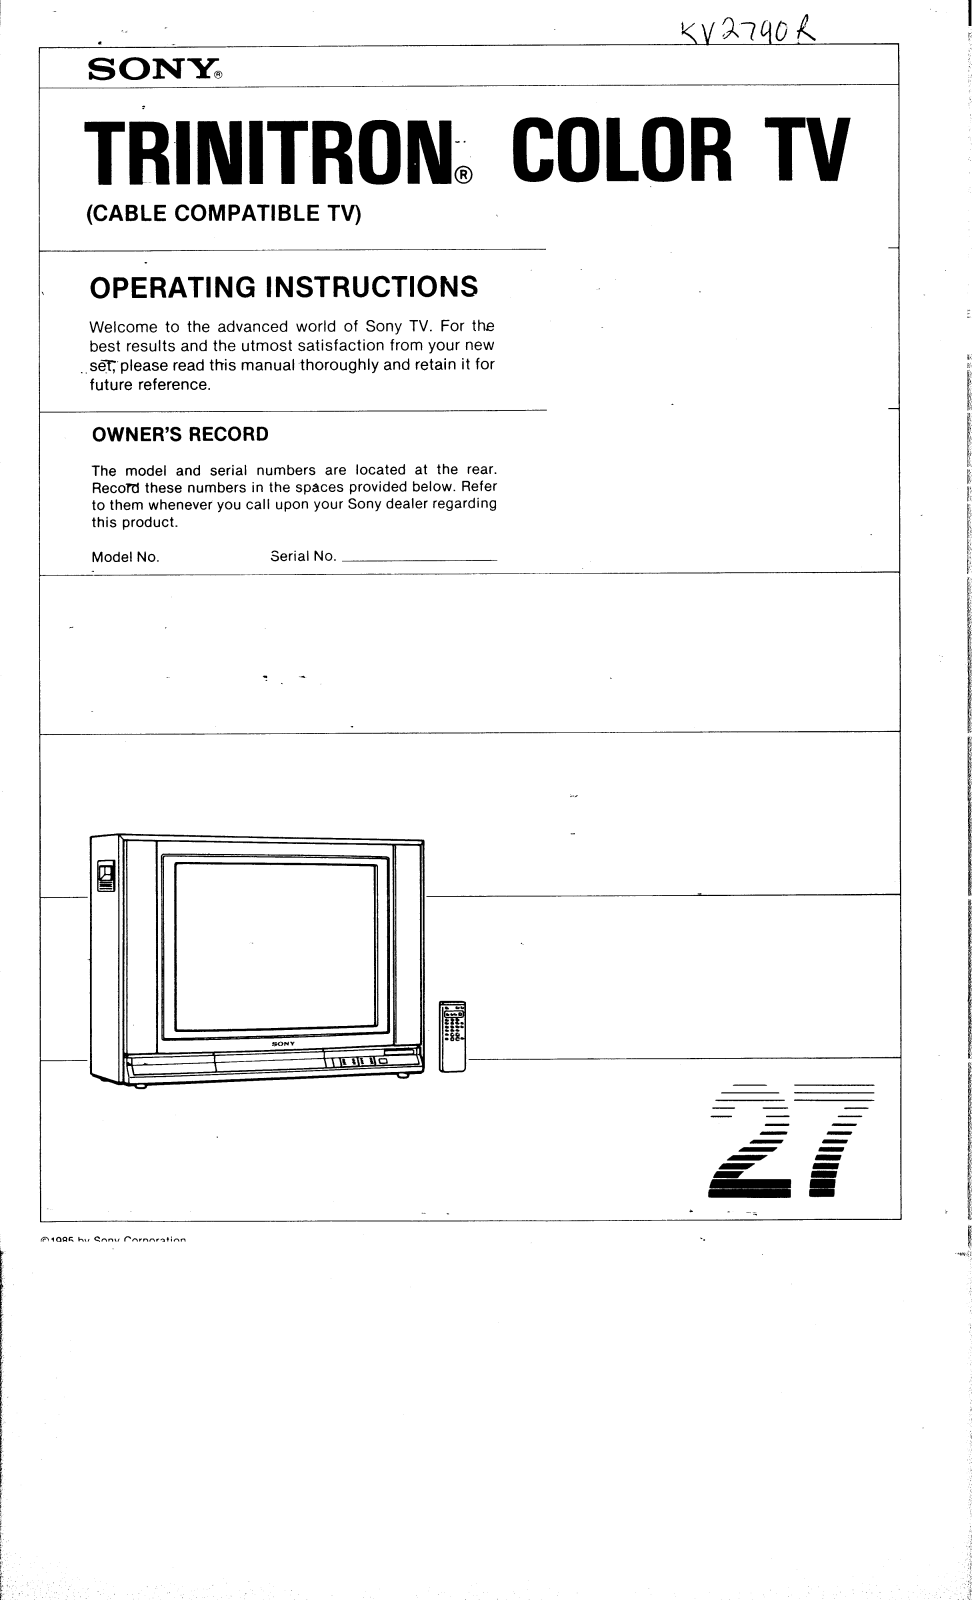 Sony KV-2790R Operating Manual